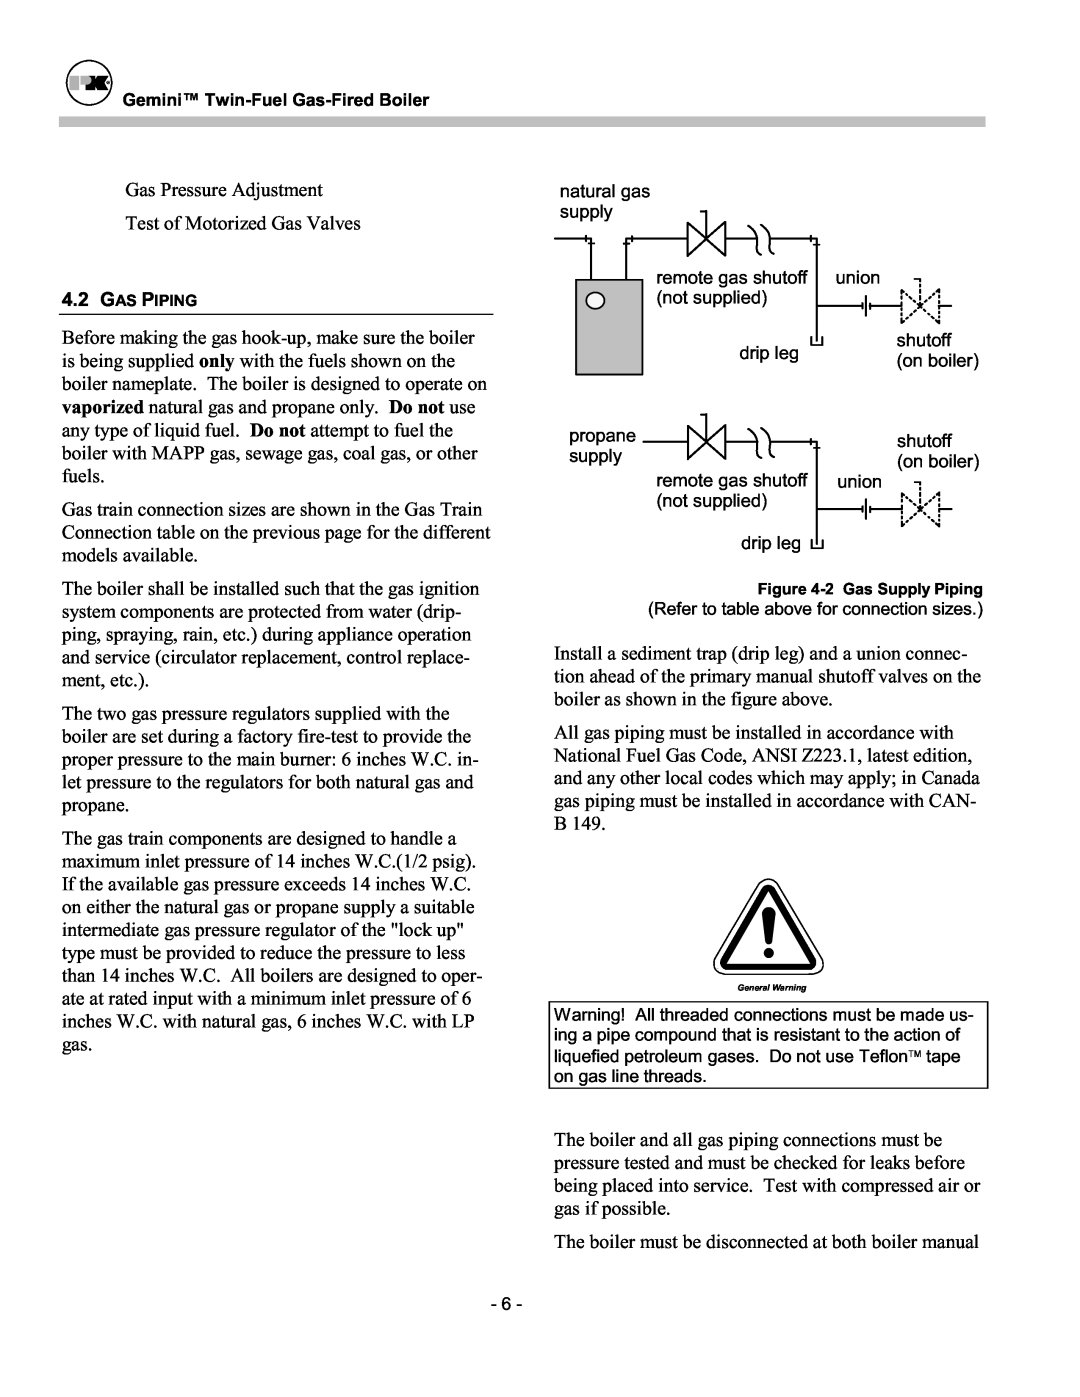 Patterson-Kelley TBIG-03 owner manual Gas Pressure Adjustment 